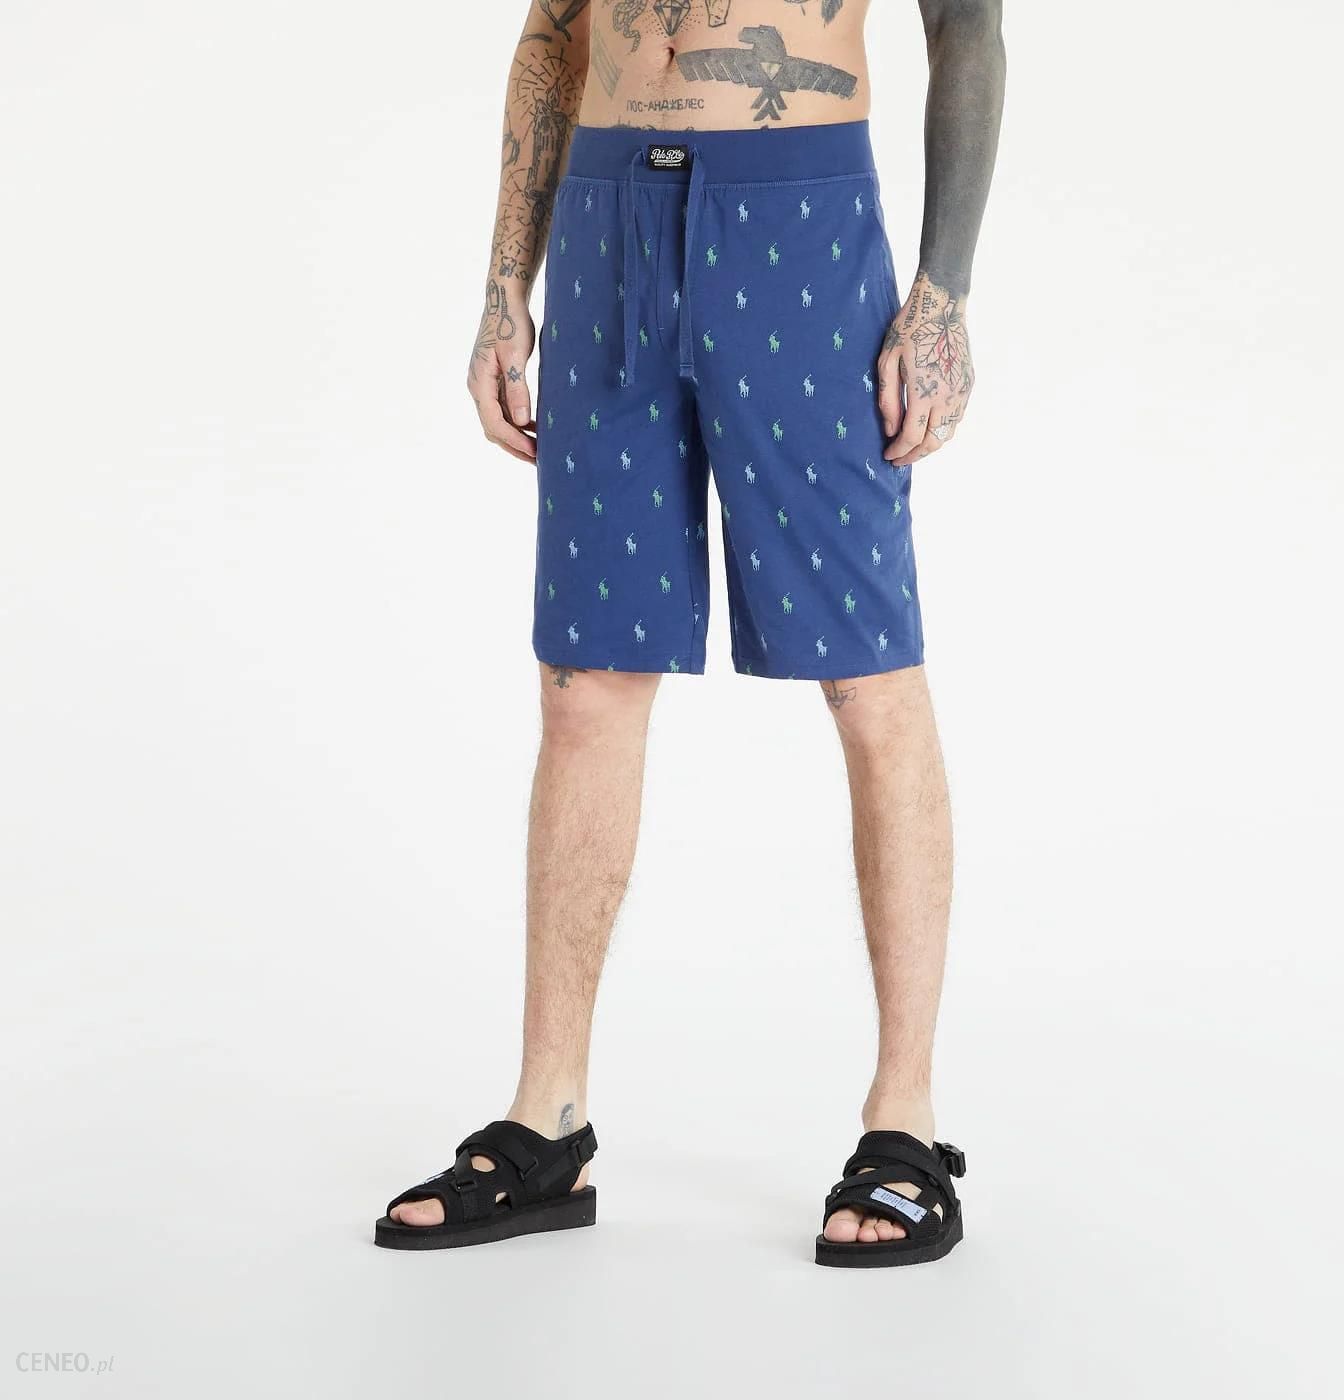 Polo Ralph Lauren Sleepwear Shorts Blue - Ceny i opinie - Ceneo.pl